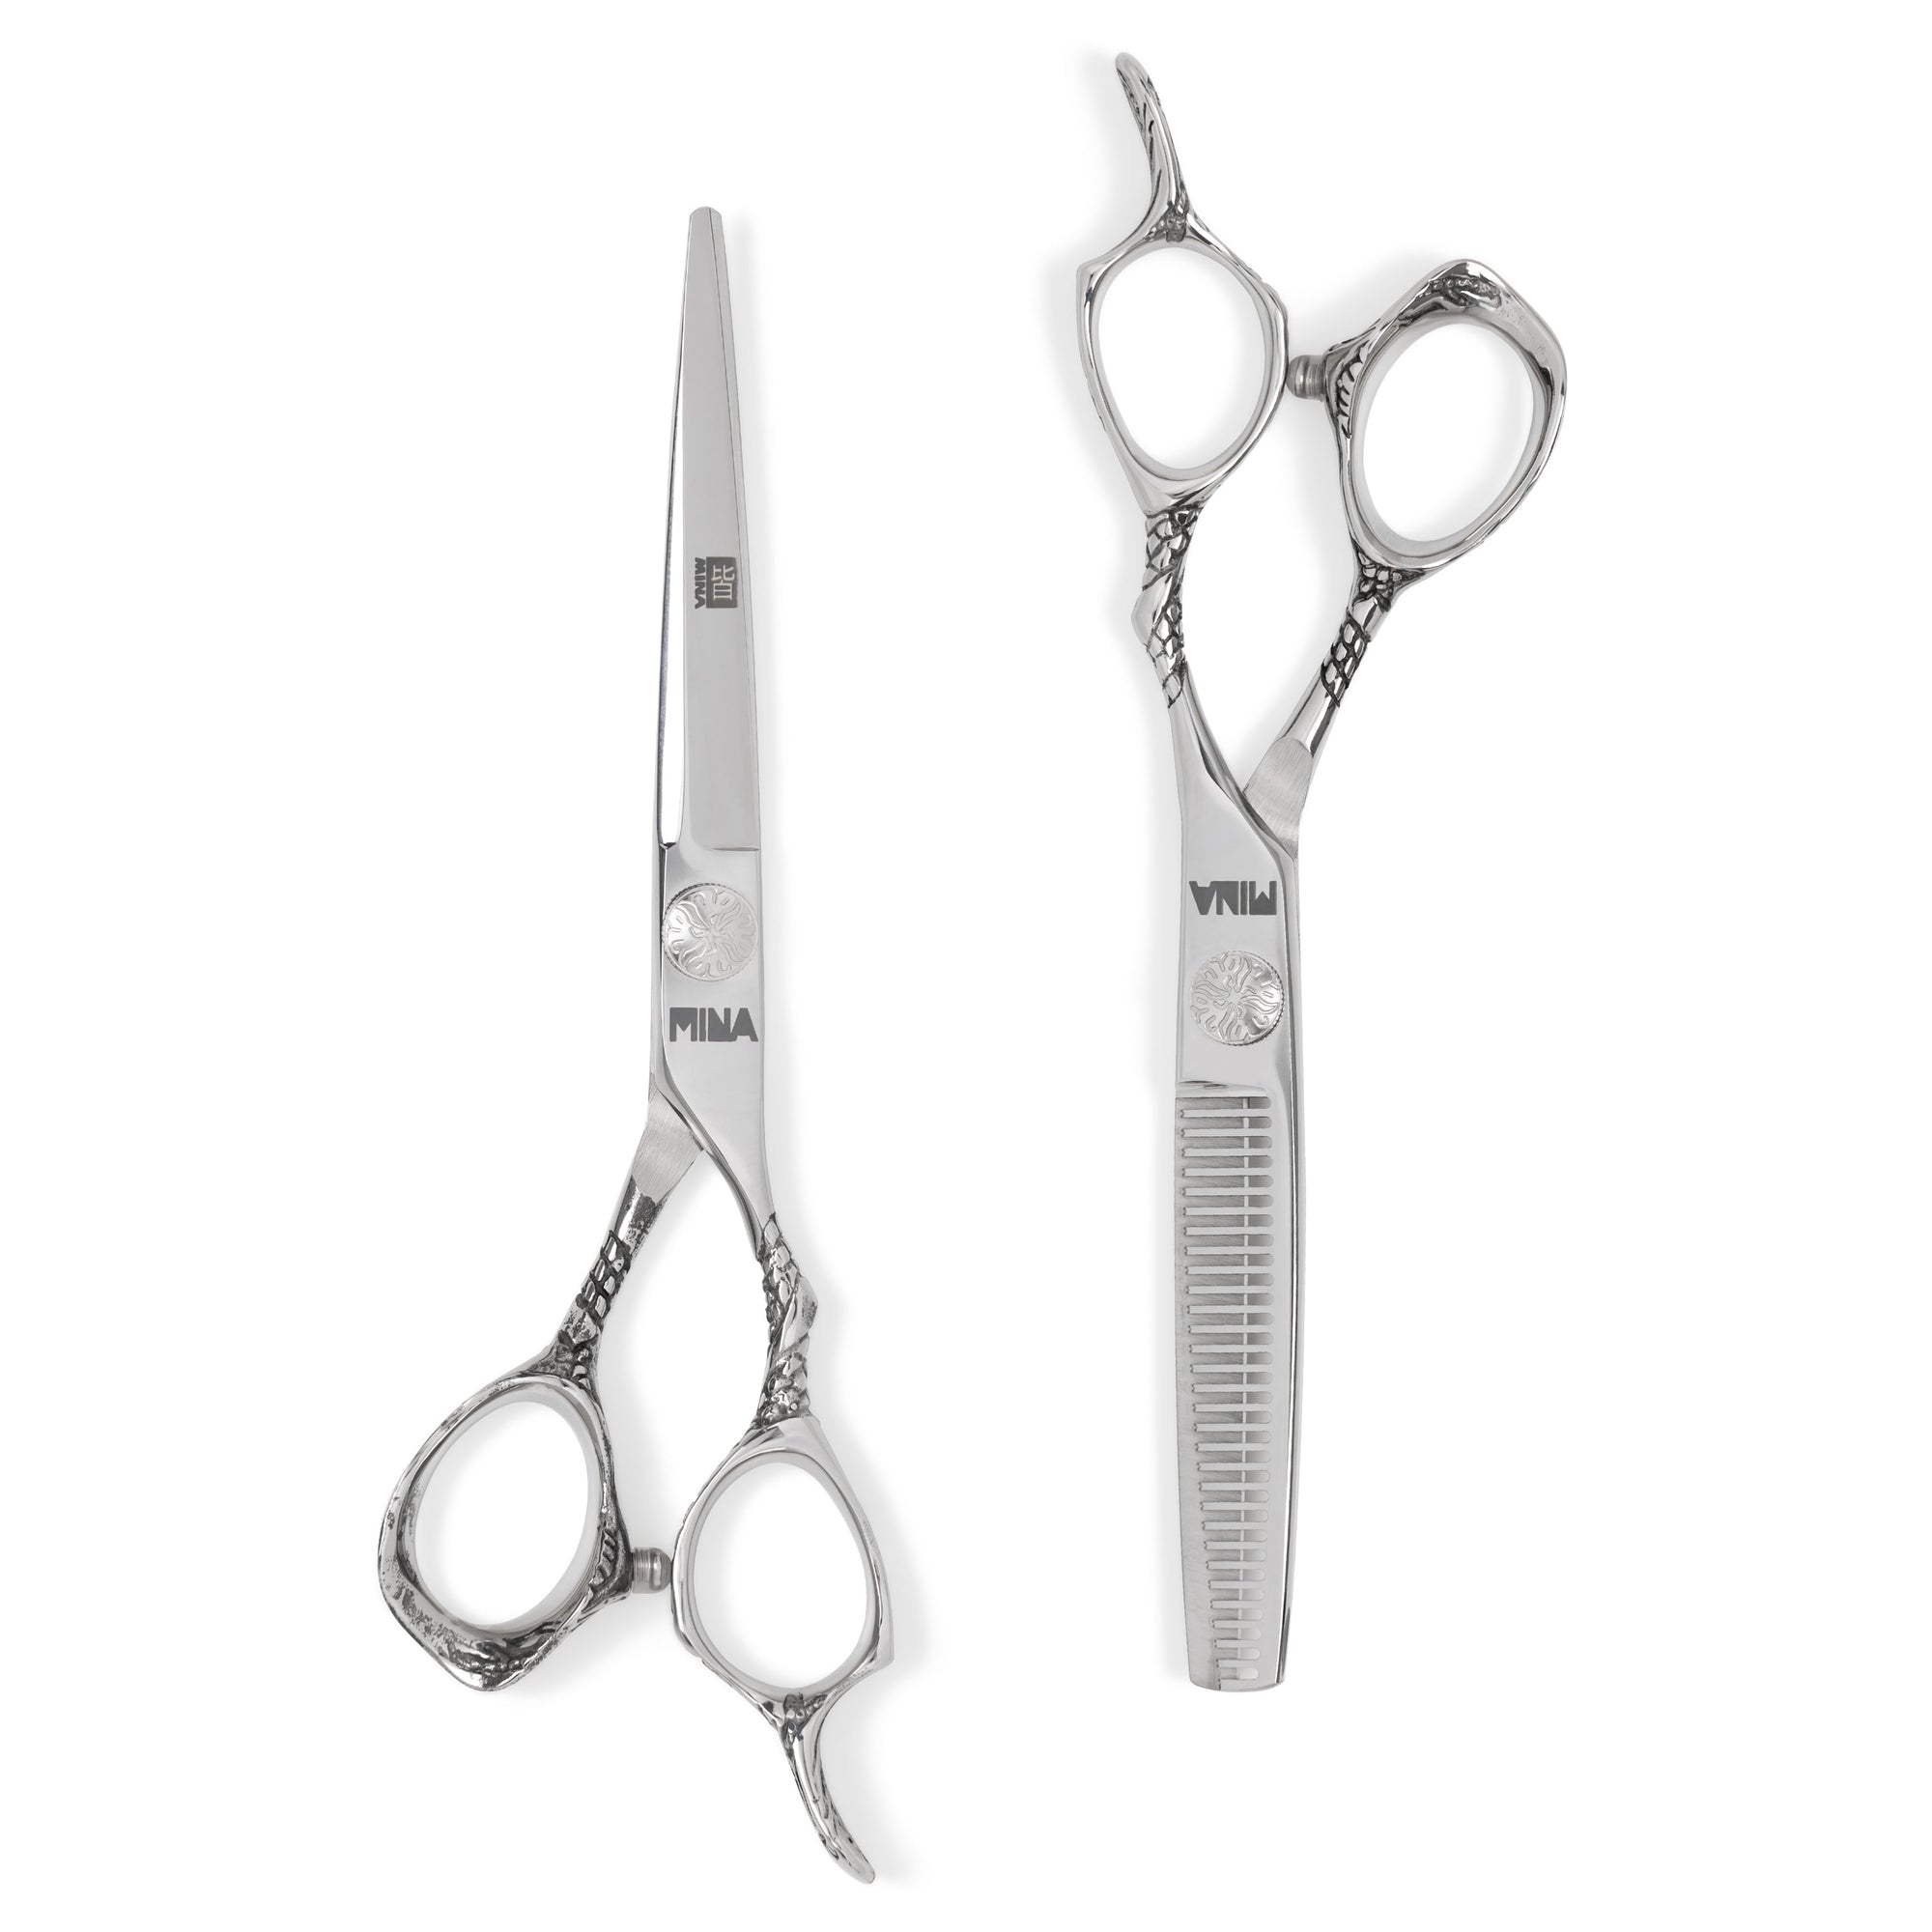 Gpoty Hair Cutting Scissors Set, 12Pcs Professional Haircut